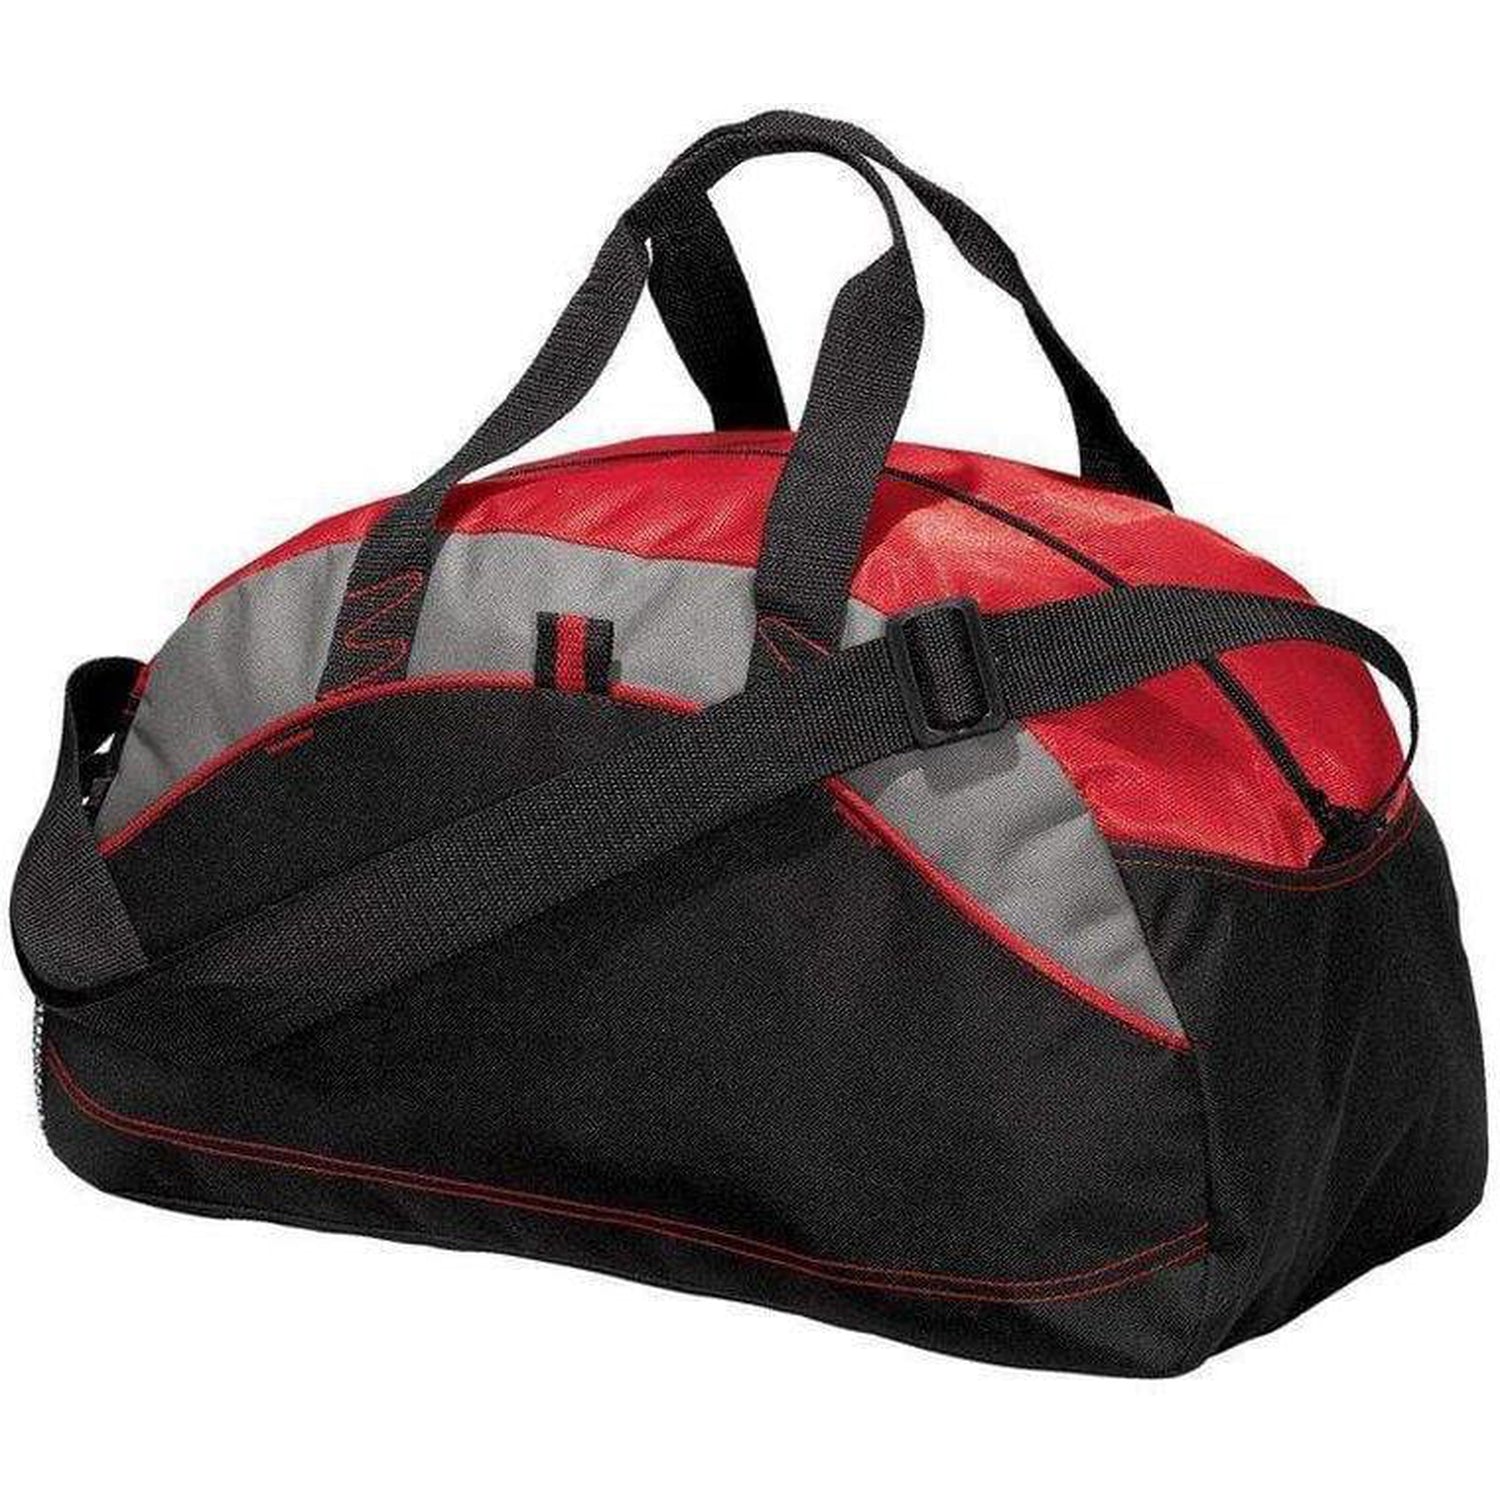 Wholesale Duffle Bags & Duffle Bags in Bulk, Travel Duffle Bags